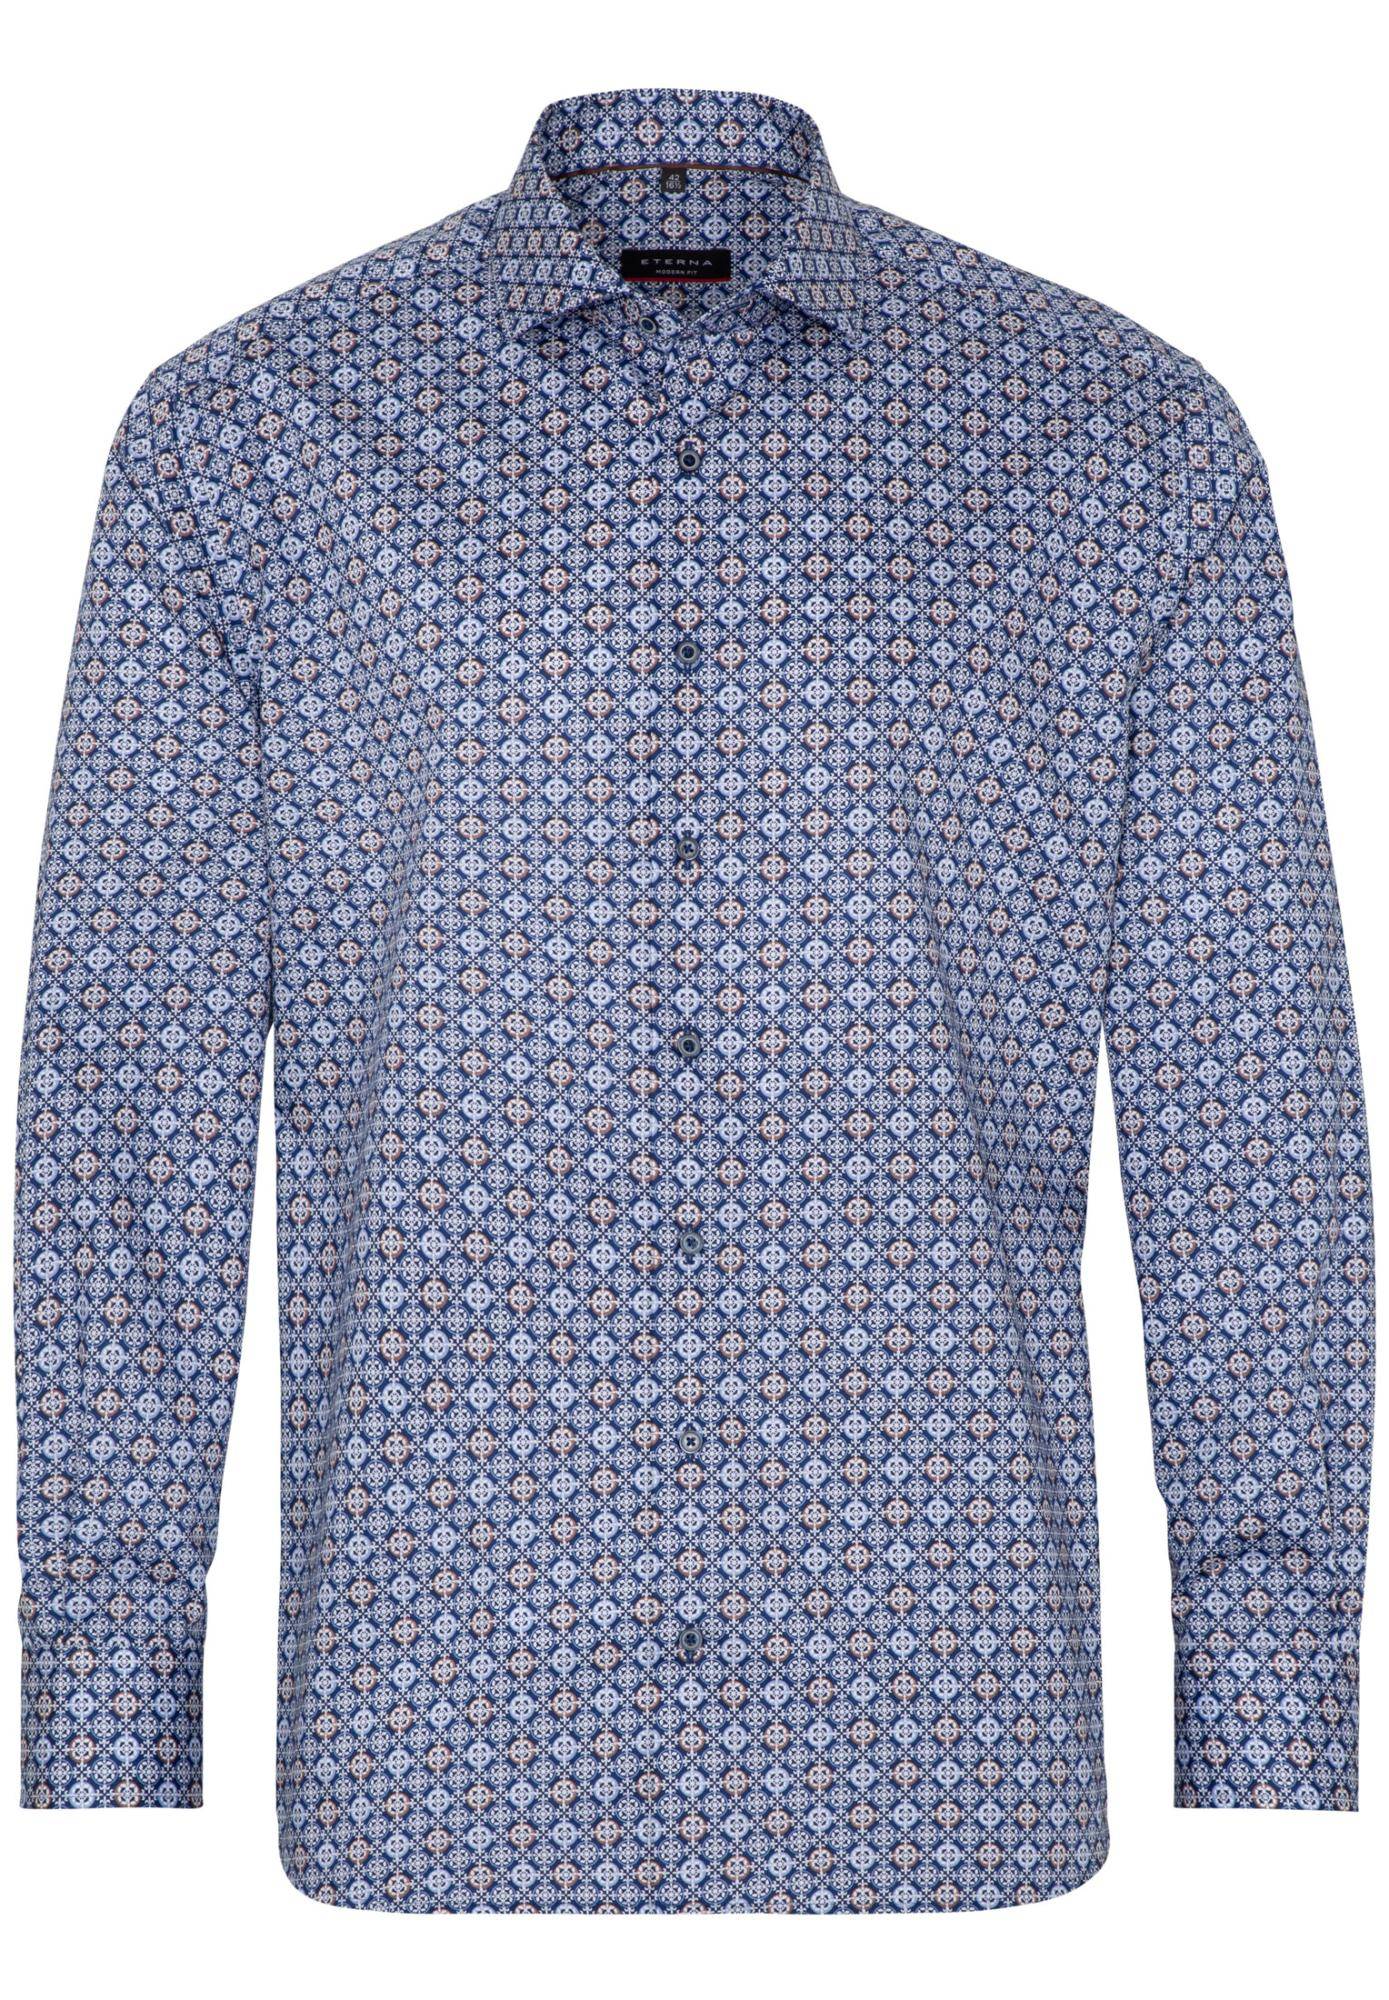 Мужская рубашка ETERNA, синяя, цвет синий, размер 54 - фото 1